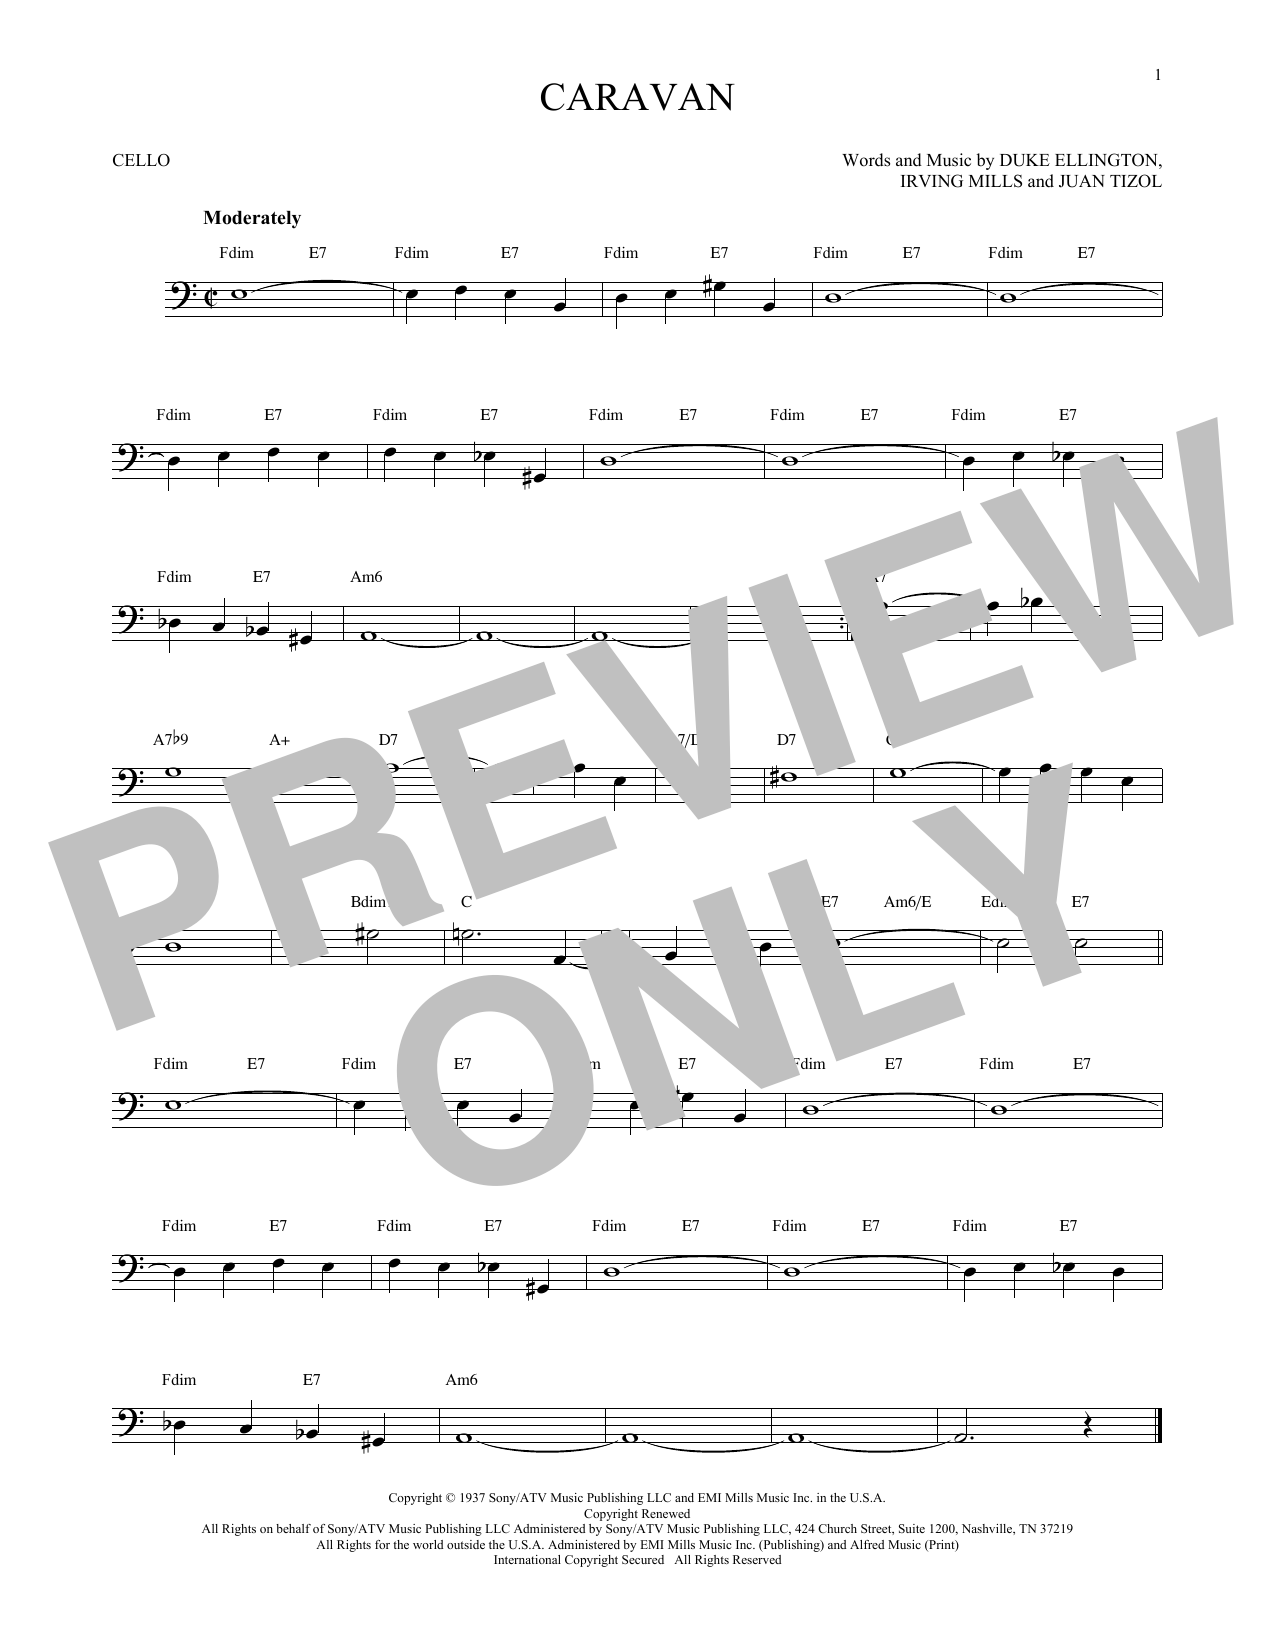 Juan Tizol & Duke Ellington Caravan Sheet Music Notes & Chords for Tenor Saxophone - Download or Print PDF